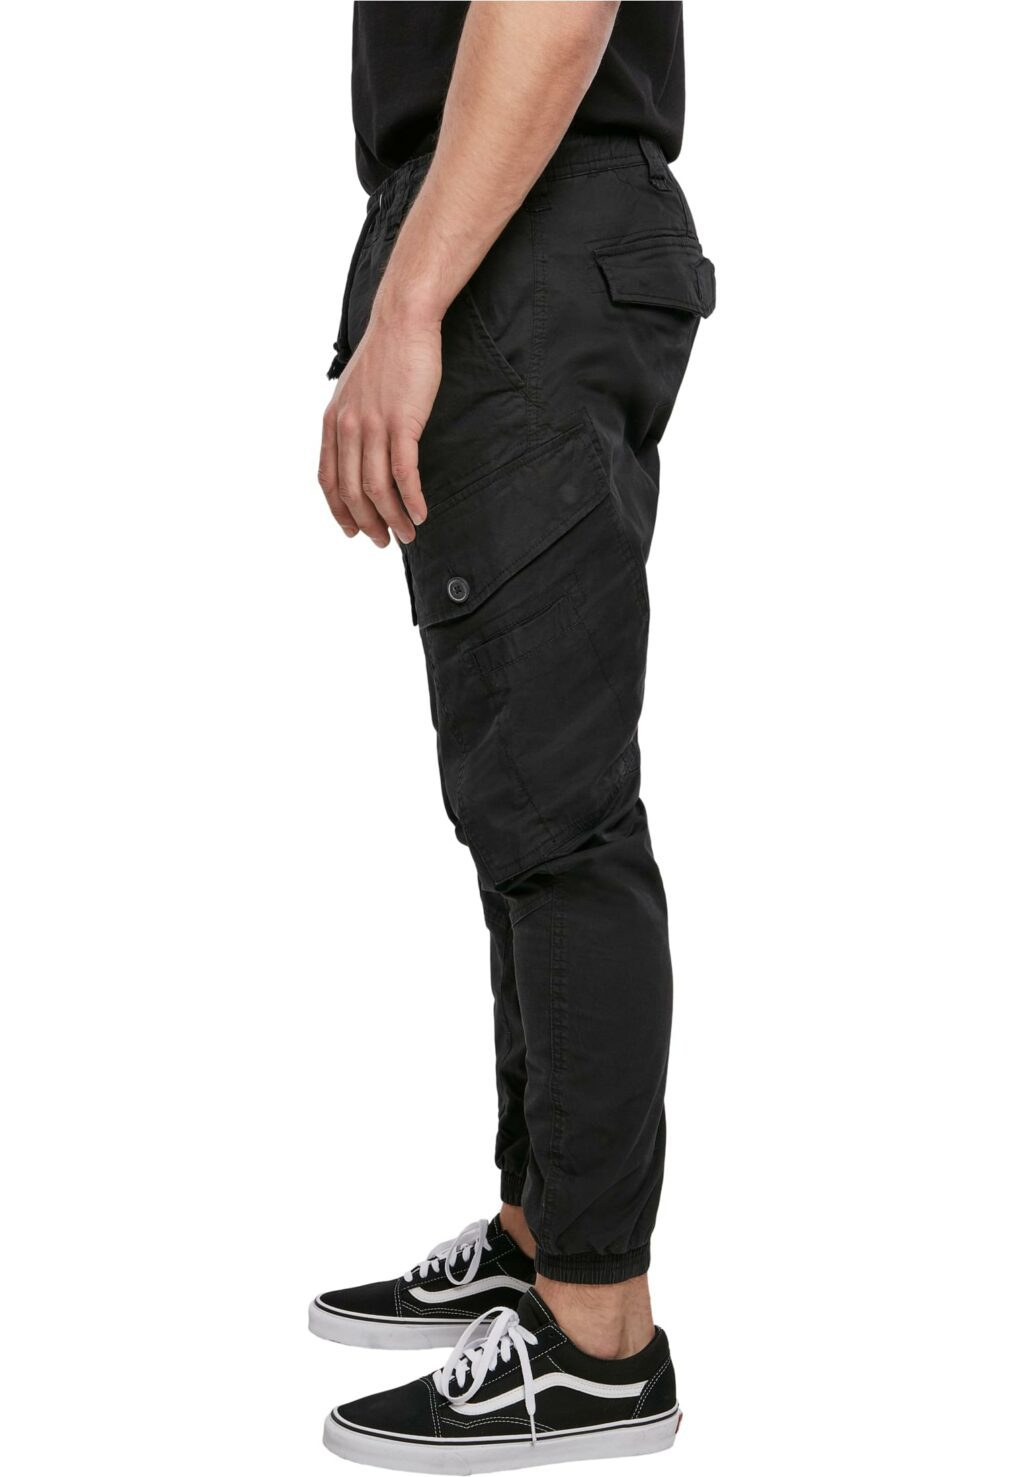 Brandit Ray Vintage Trousers black BD1018